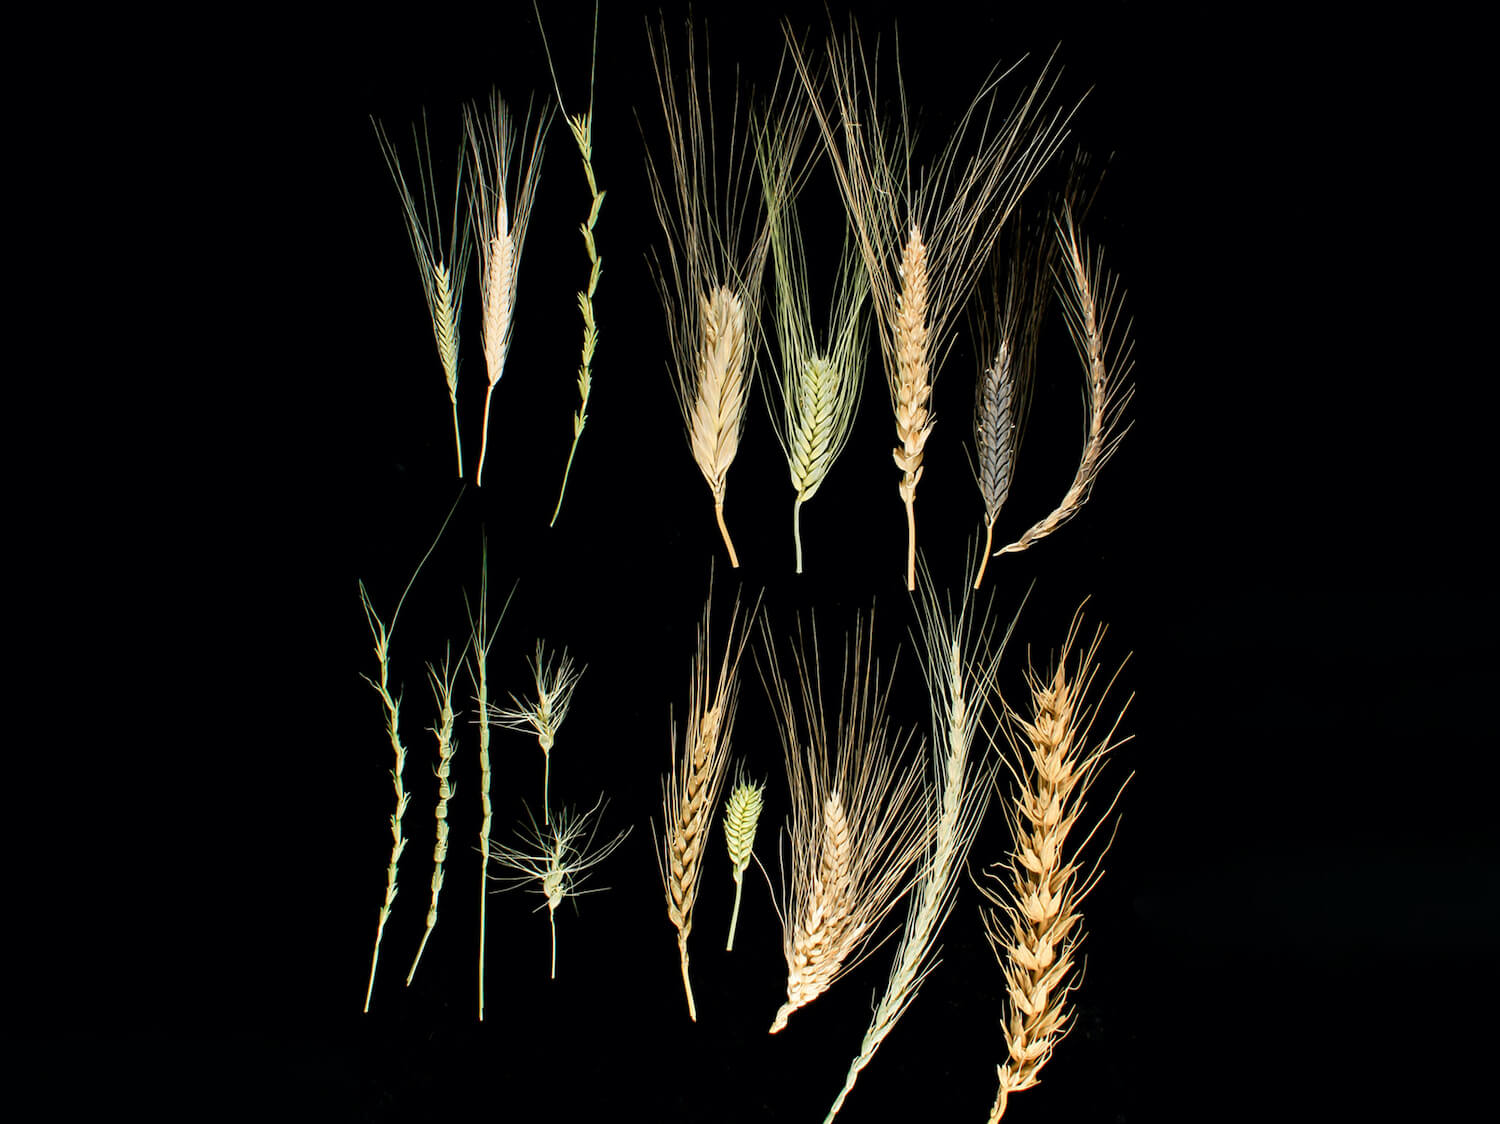 Wheat diversity. May 2021